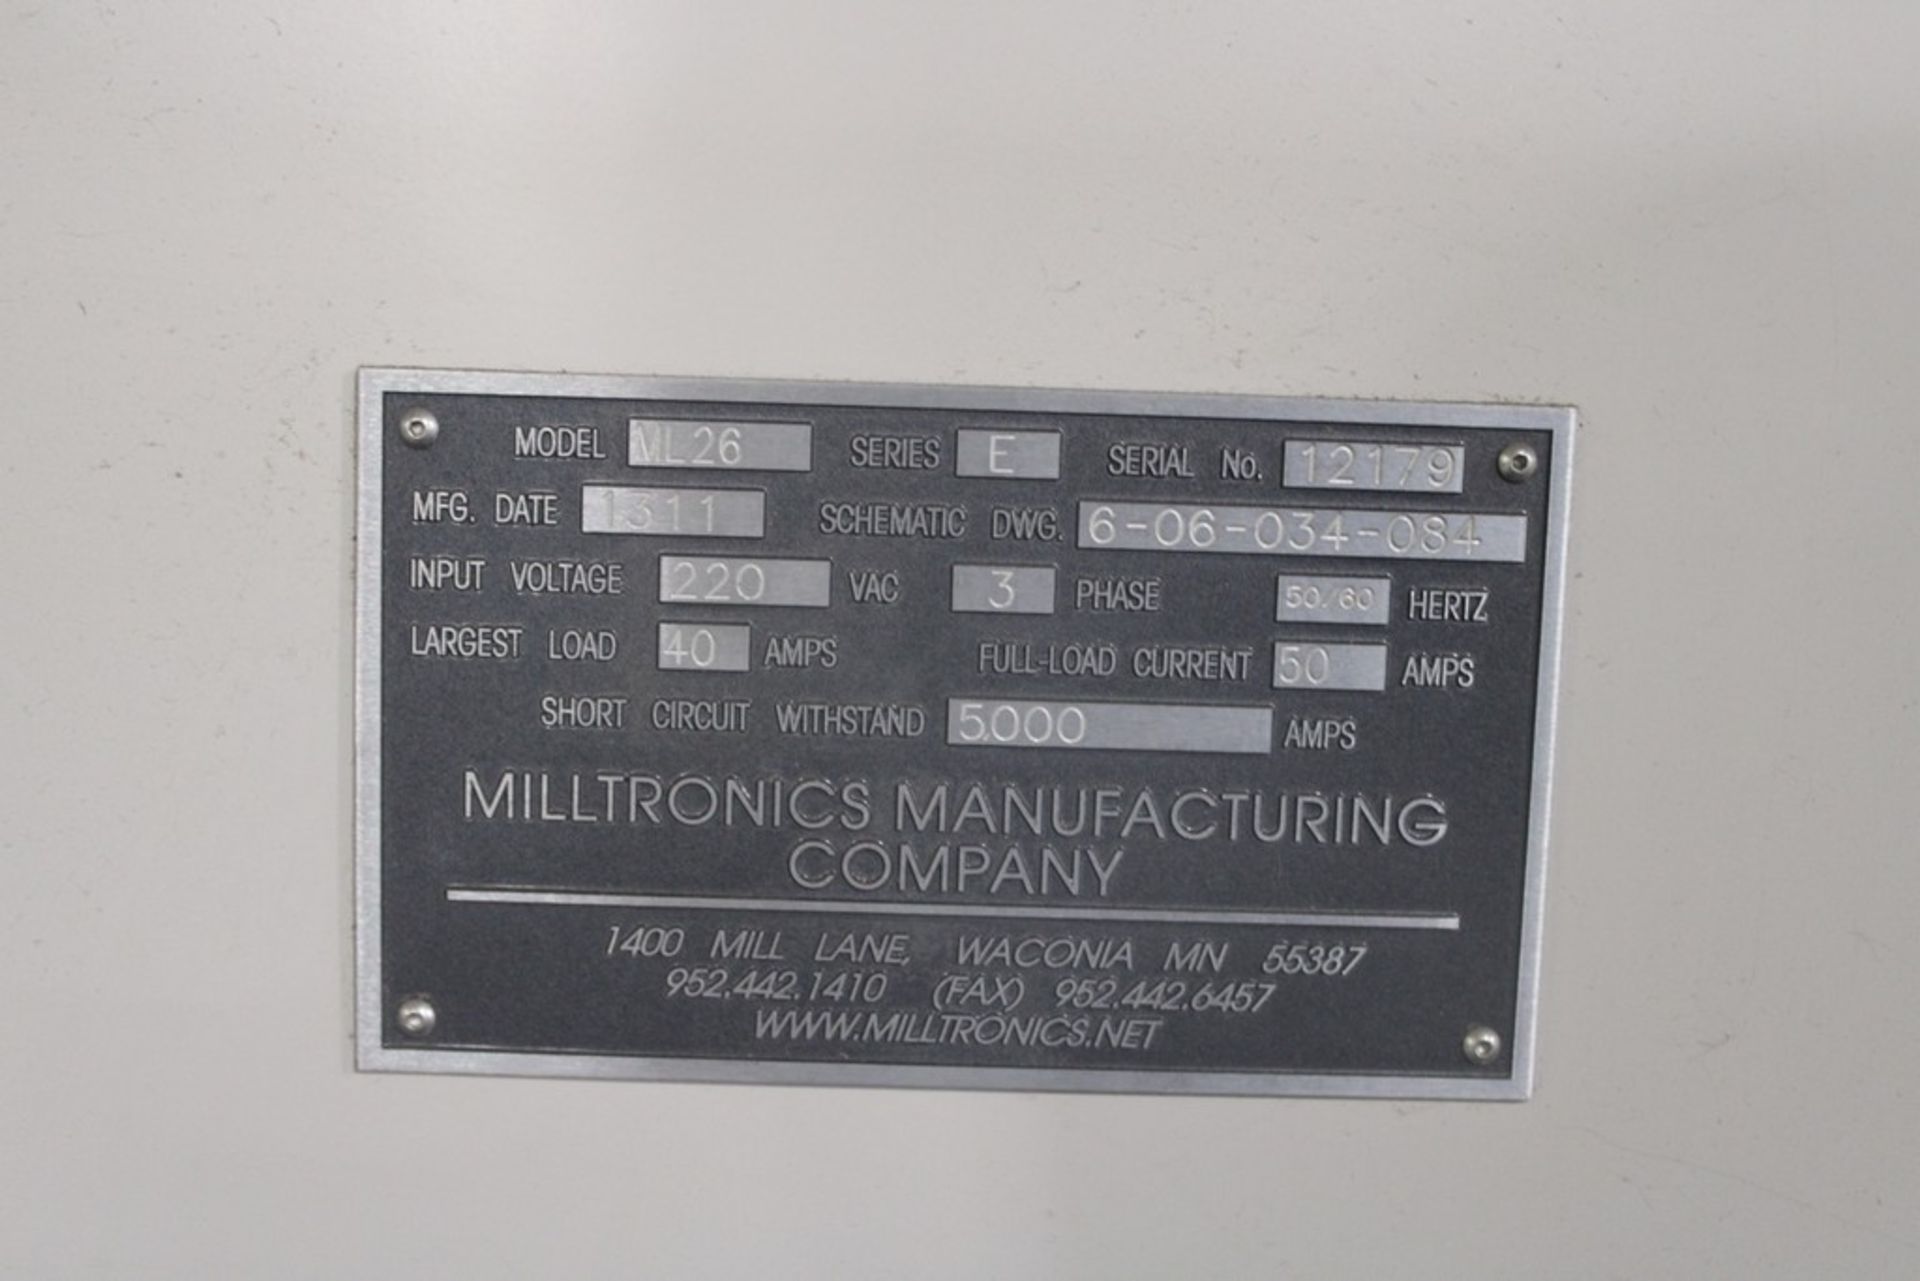 MILLTRONICS MODEL ML26 SERIES E CNC TURNING CENTER, S/N 12179 (NEW 2013) 27” SWING, 40” CENTERS, - Image 10 of 15